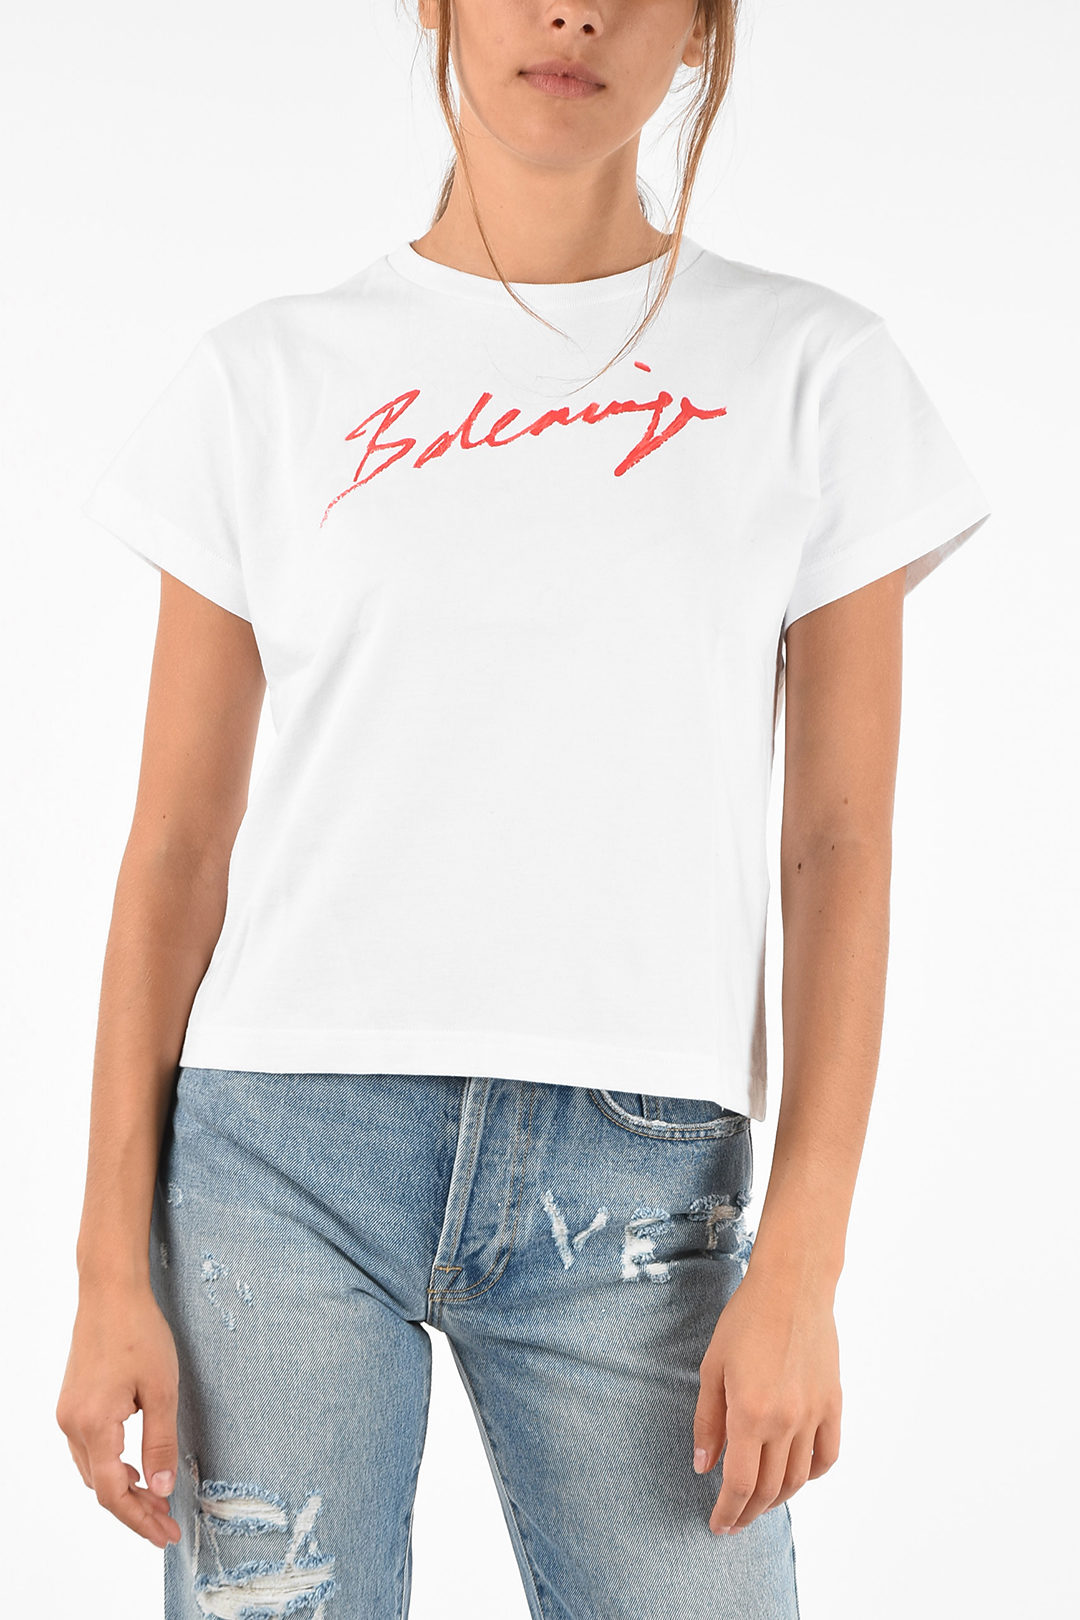 Balenciaga Printed Crop T-shirt women - Glamood Outlet